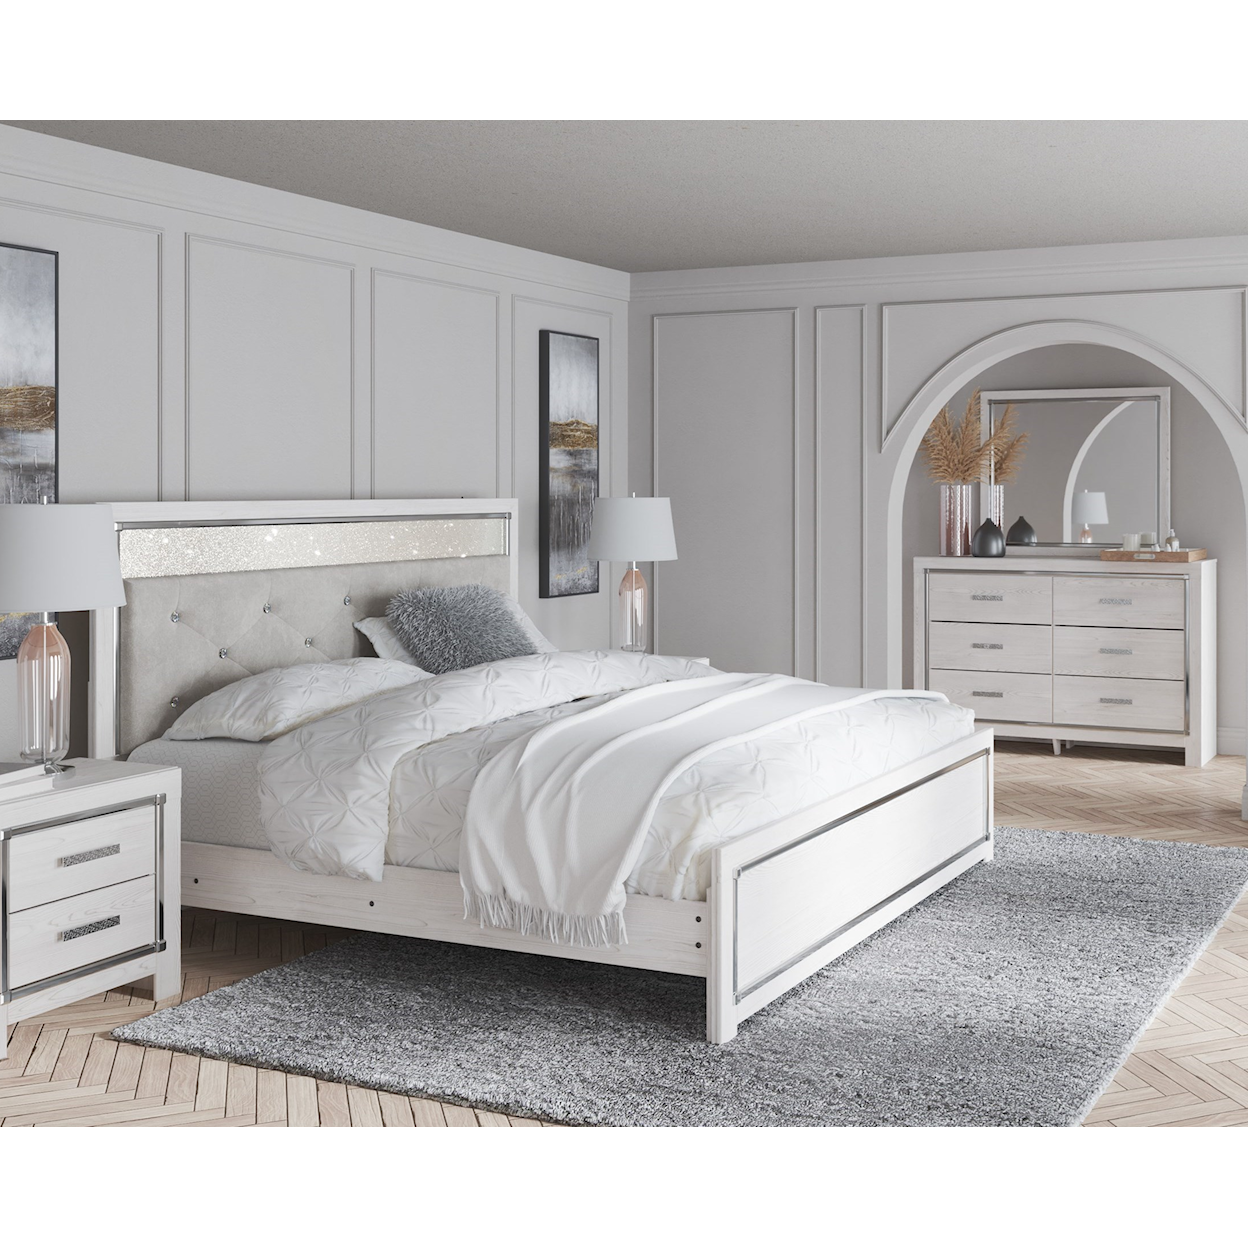 Benchcraft Altyra King Bedroom Set